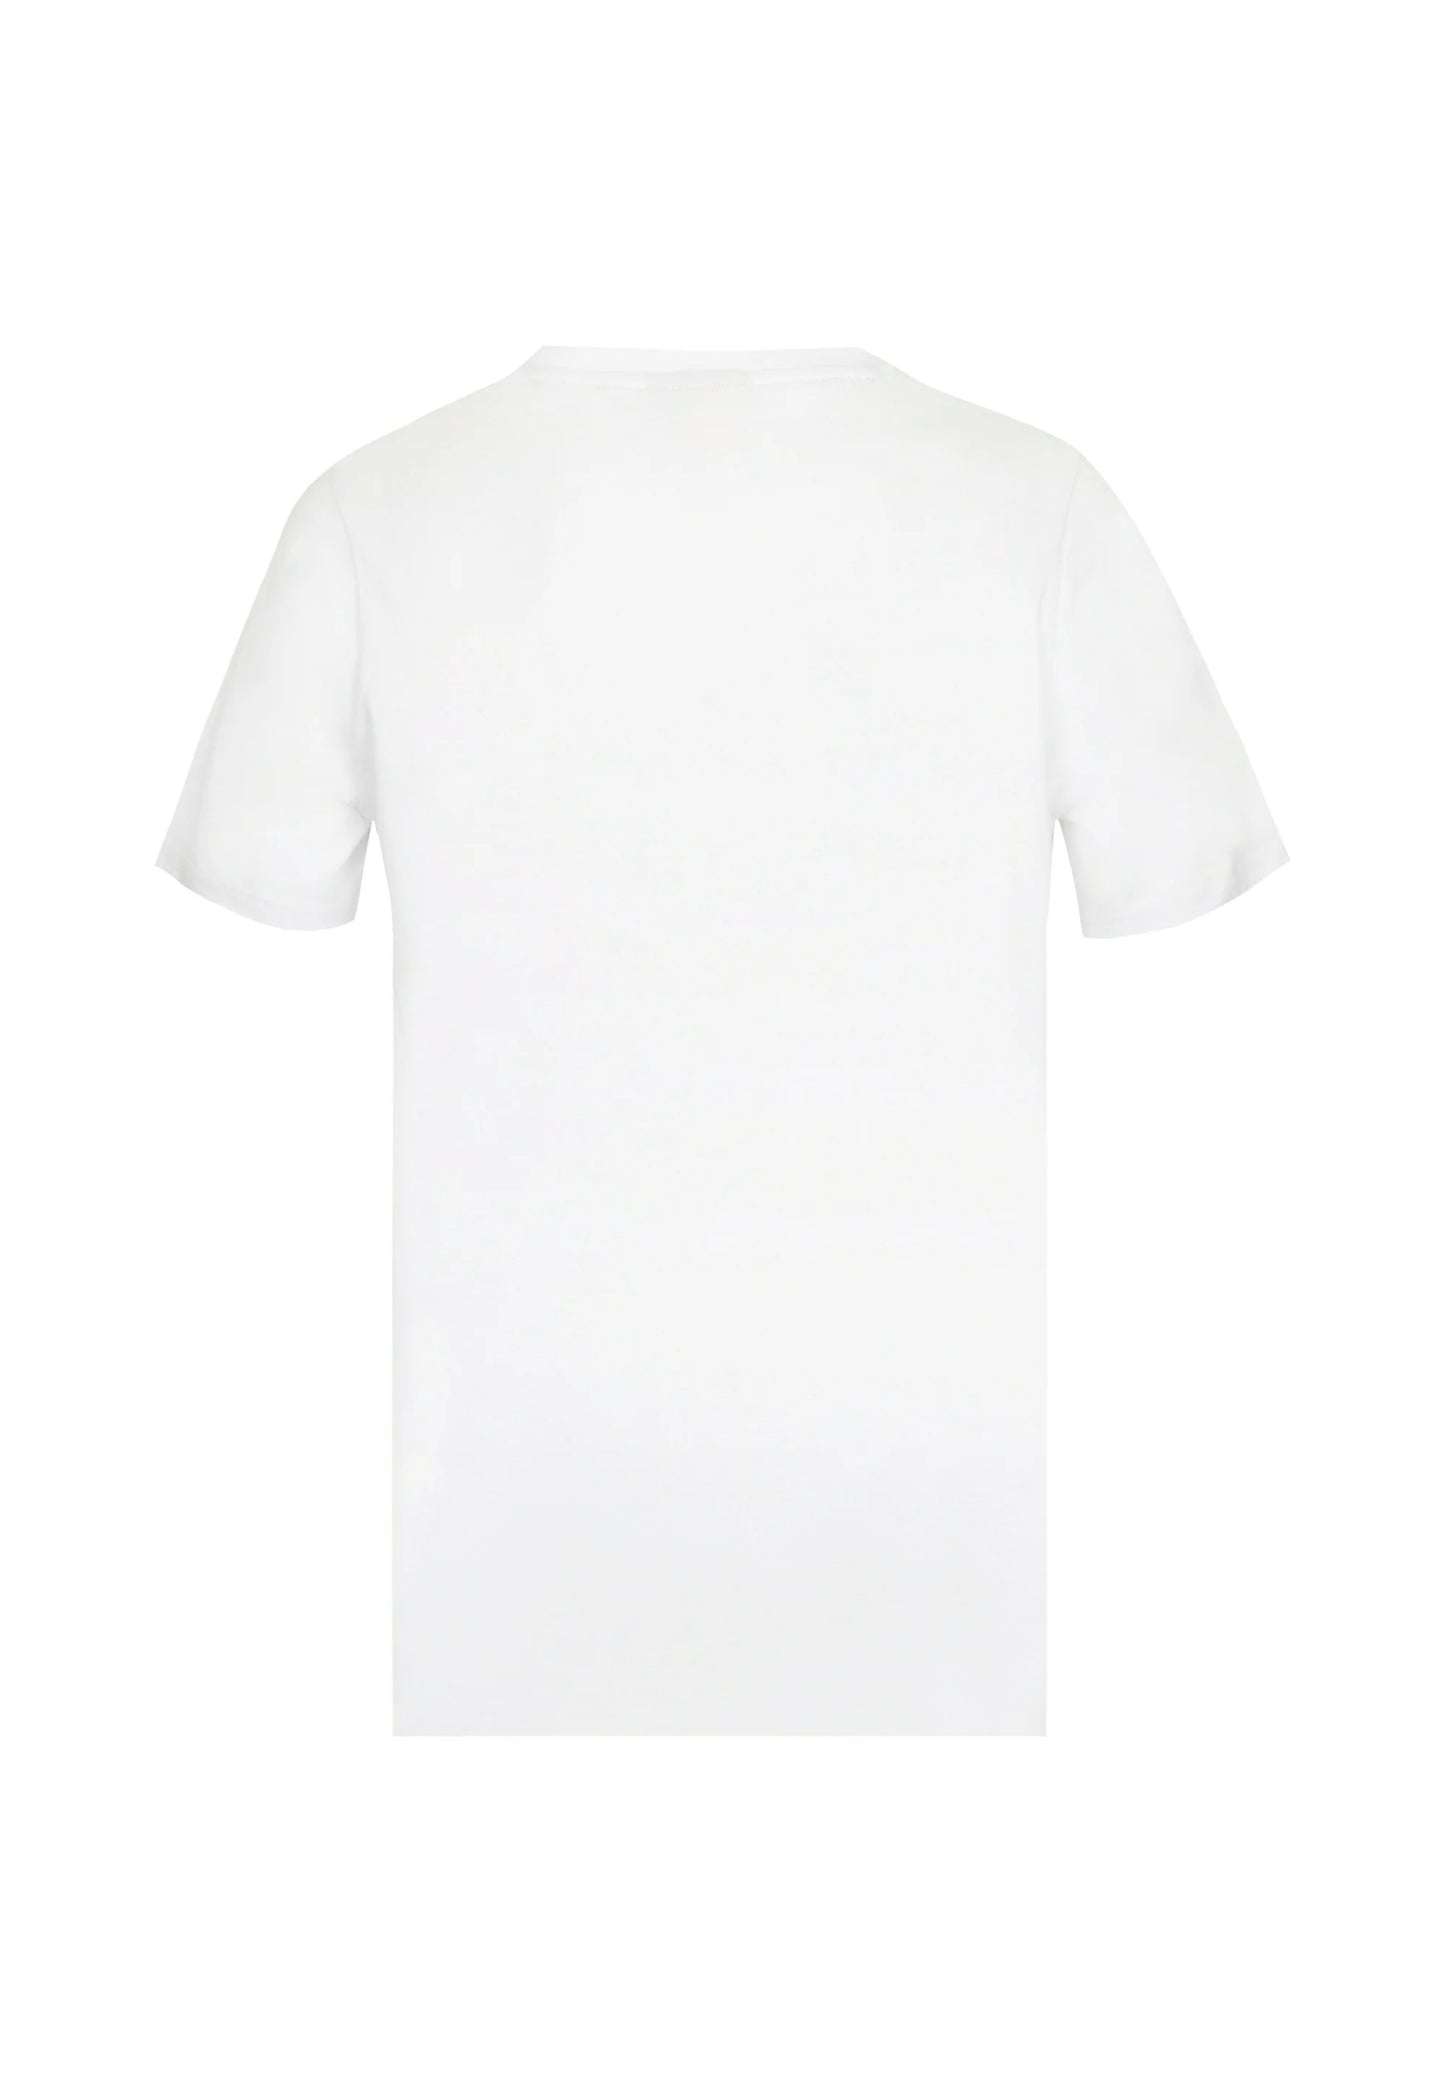 T-shirt Everlast Spark Graphic - Blanc